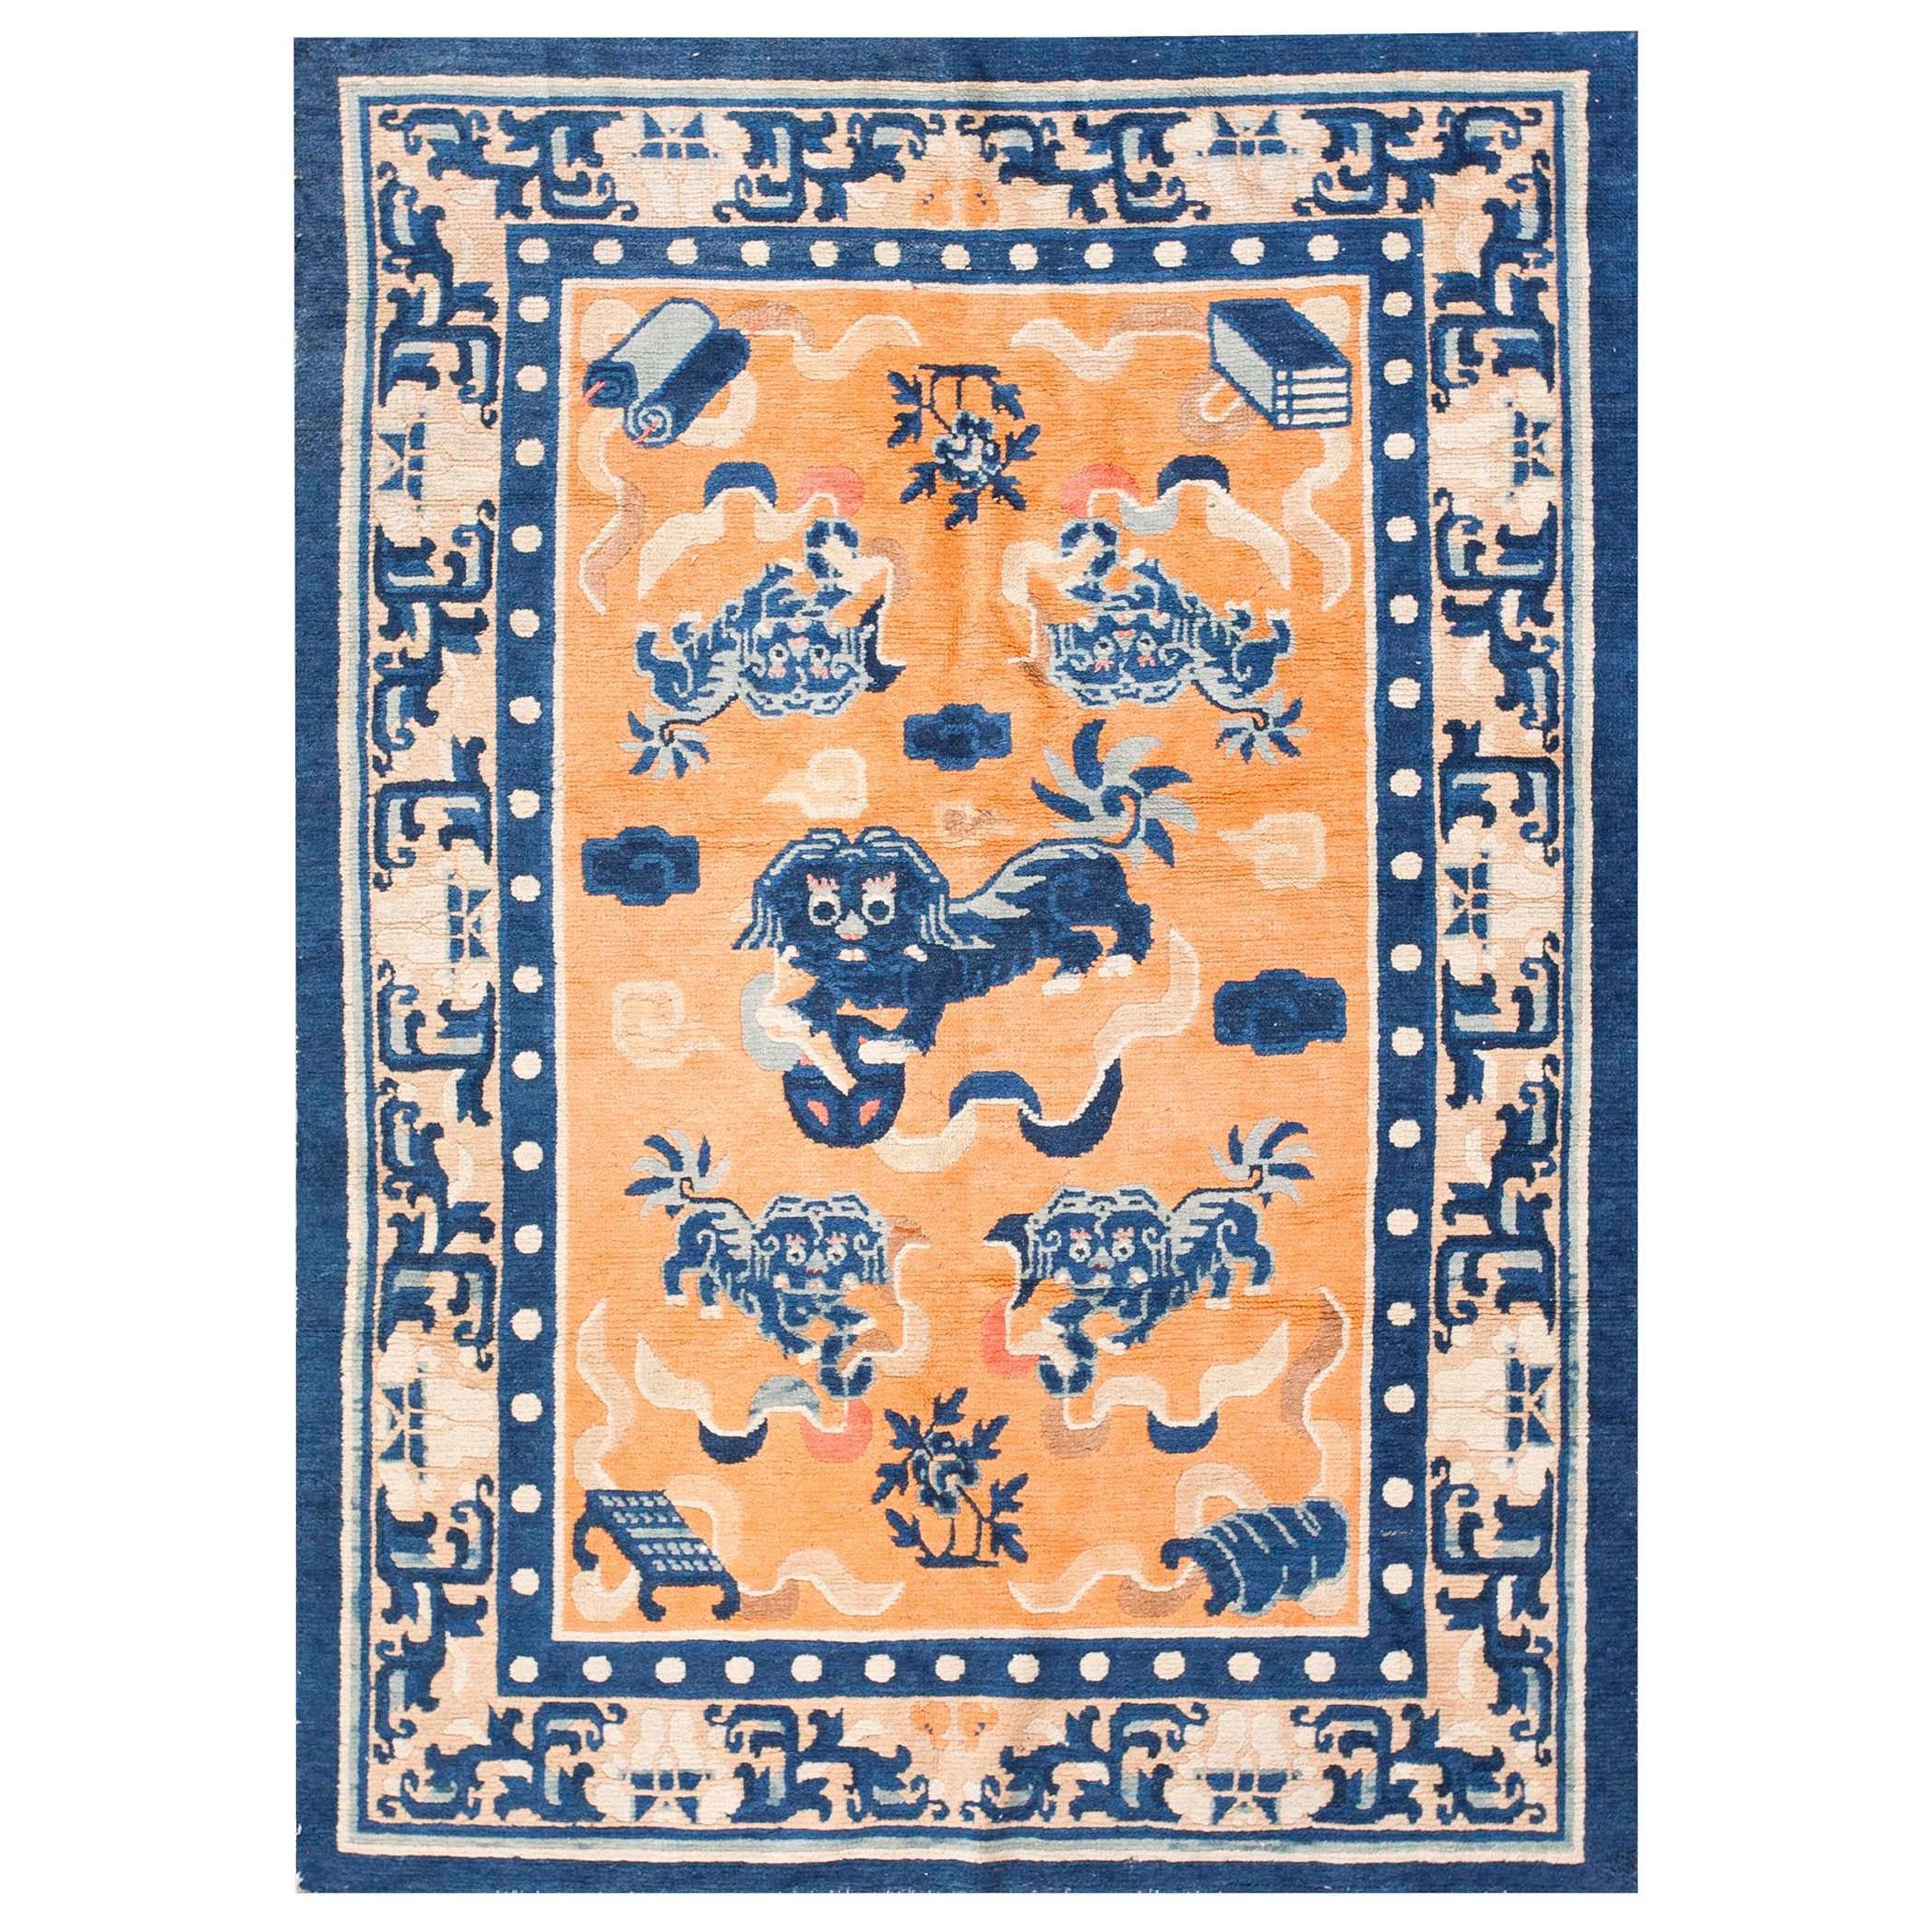 Late 19th Century Chinese Ningxia Carpet ( 4' 6" x 6' - 137 x 183 cm )